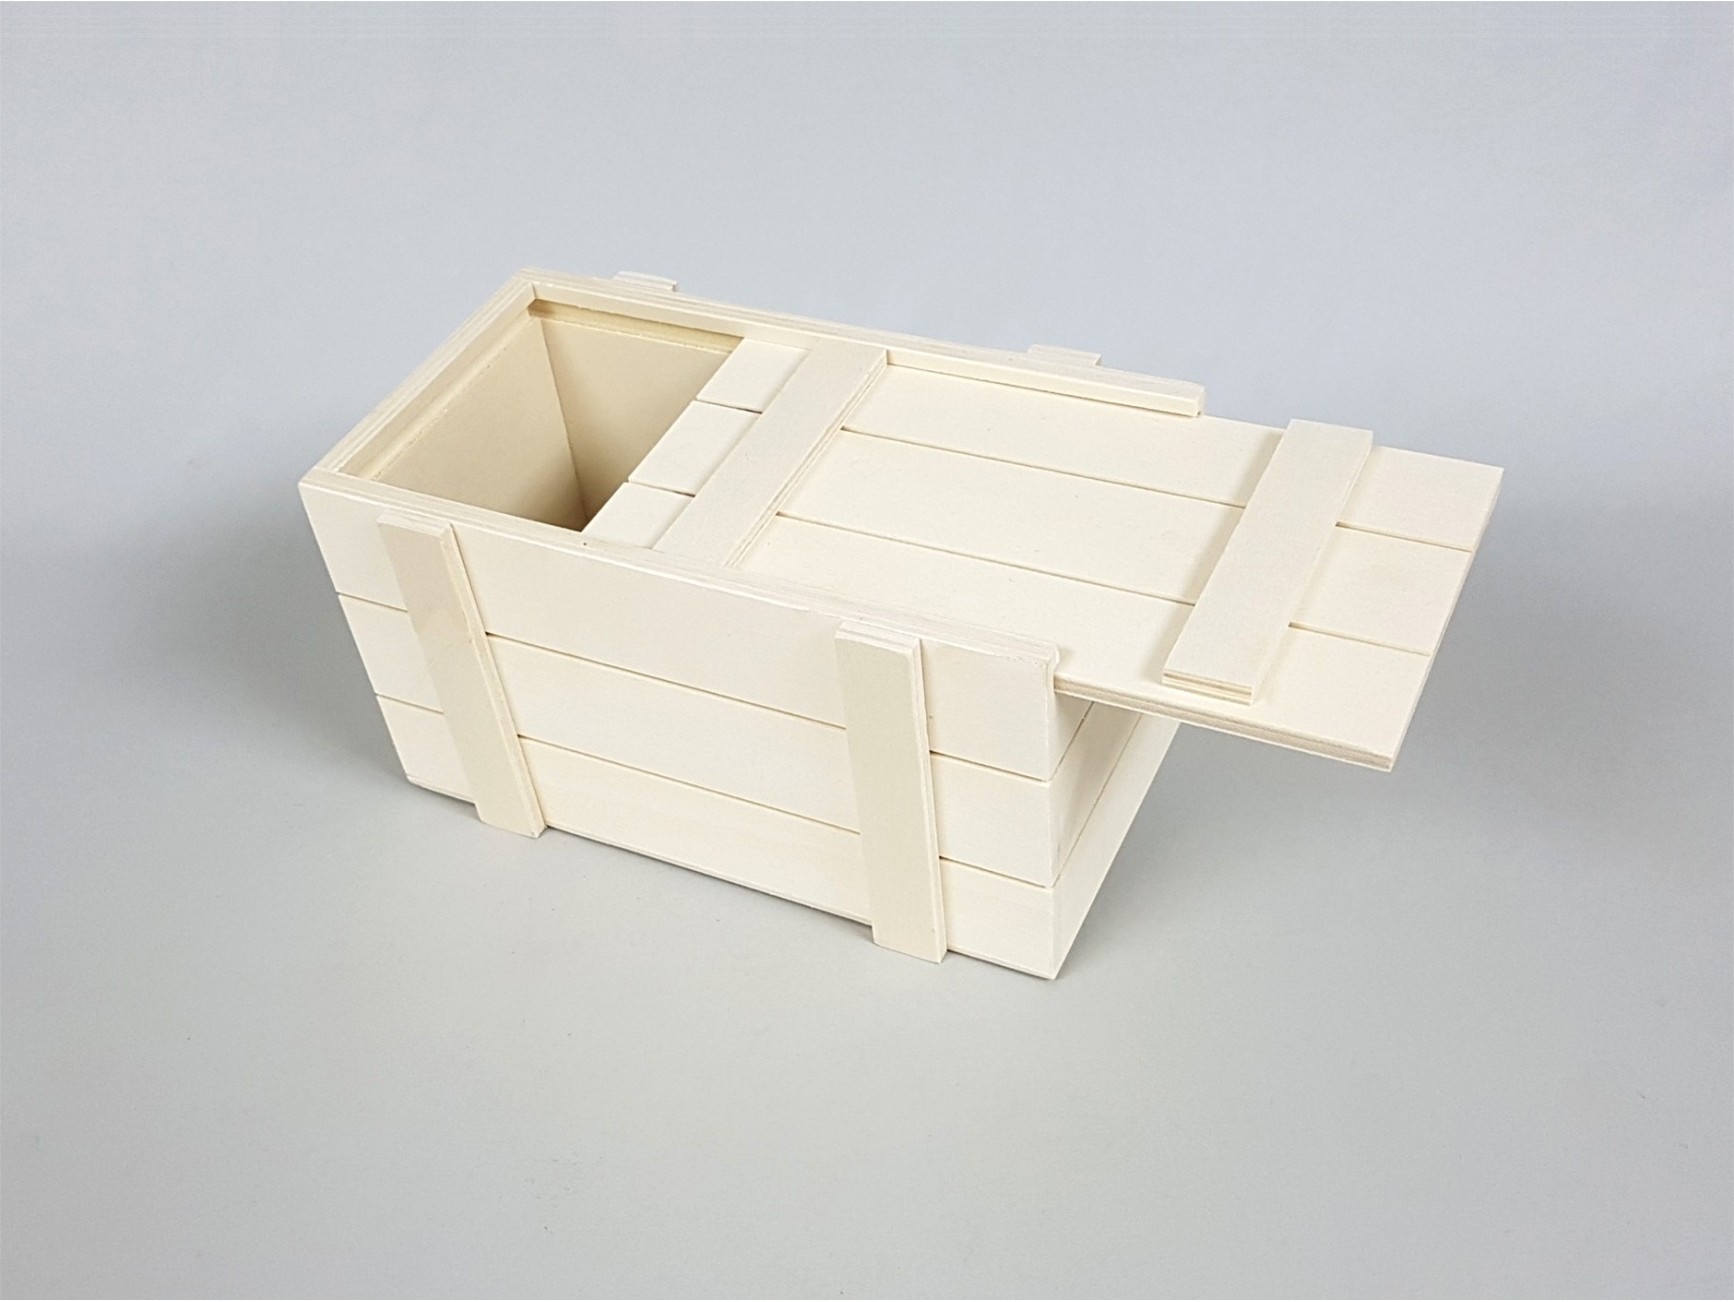 Caja Cesta de madera pequeña 2 medidas Ref.P50C14 - Mabaonline